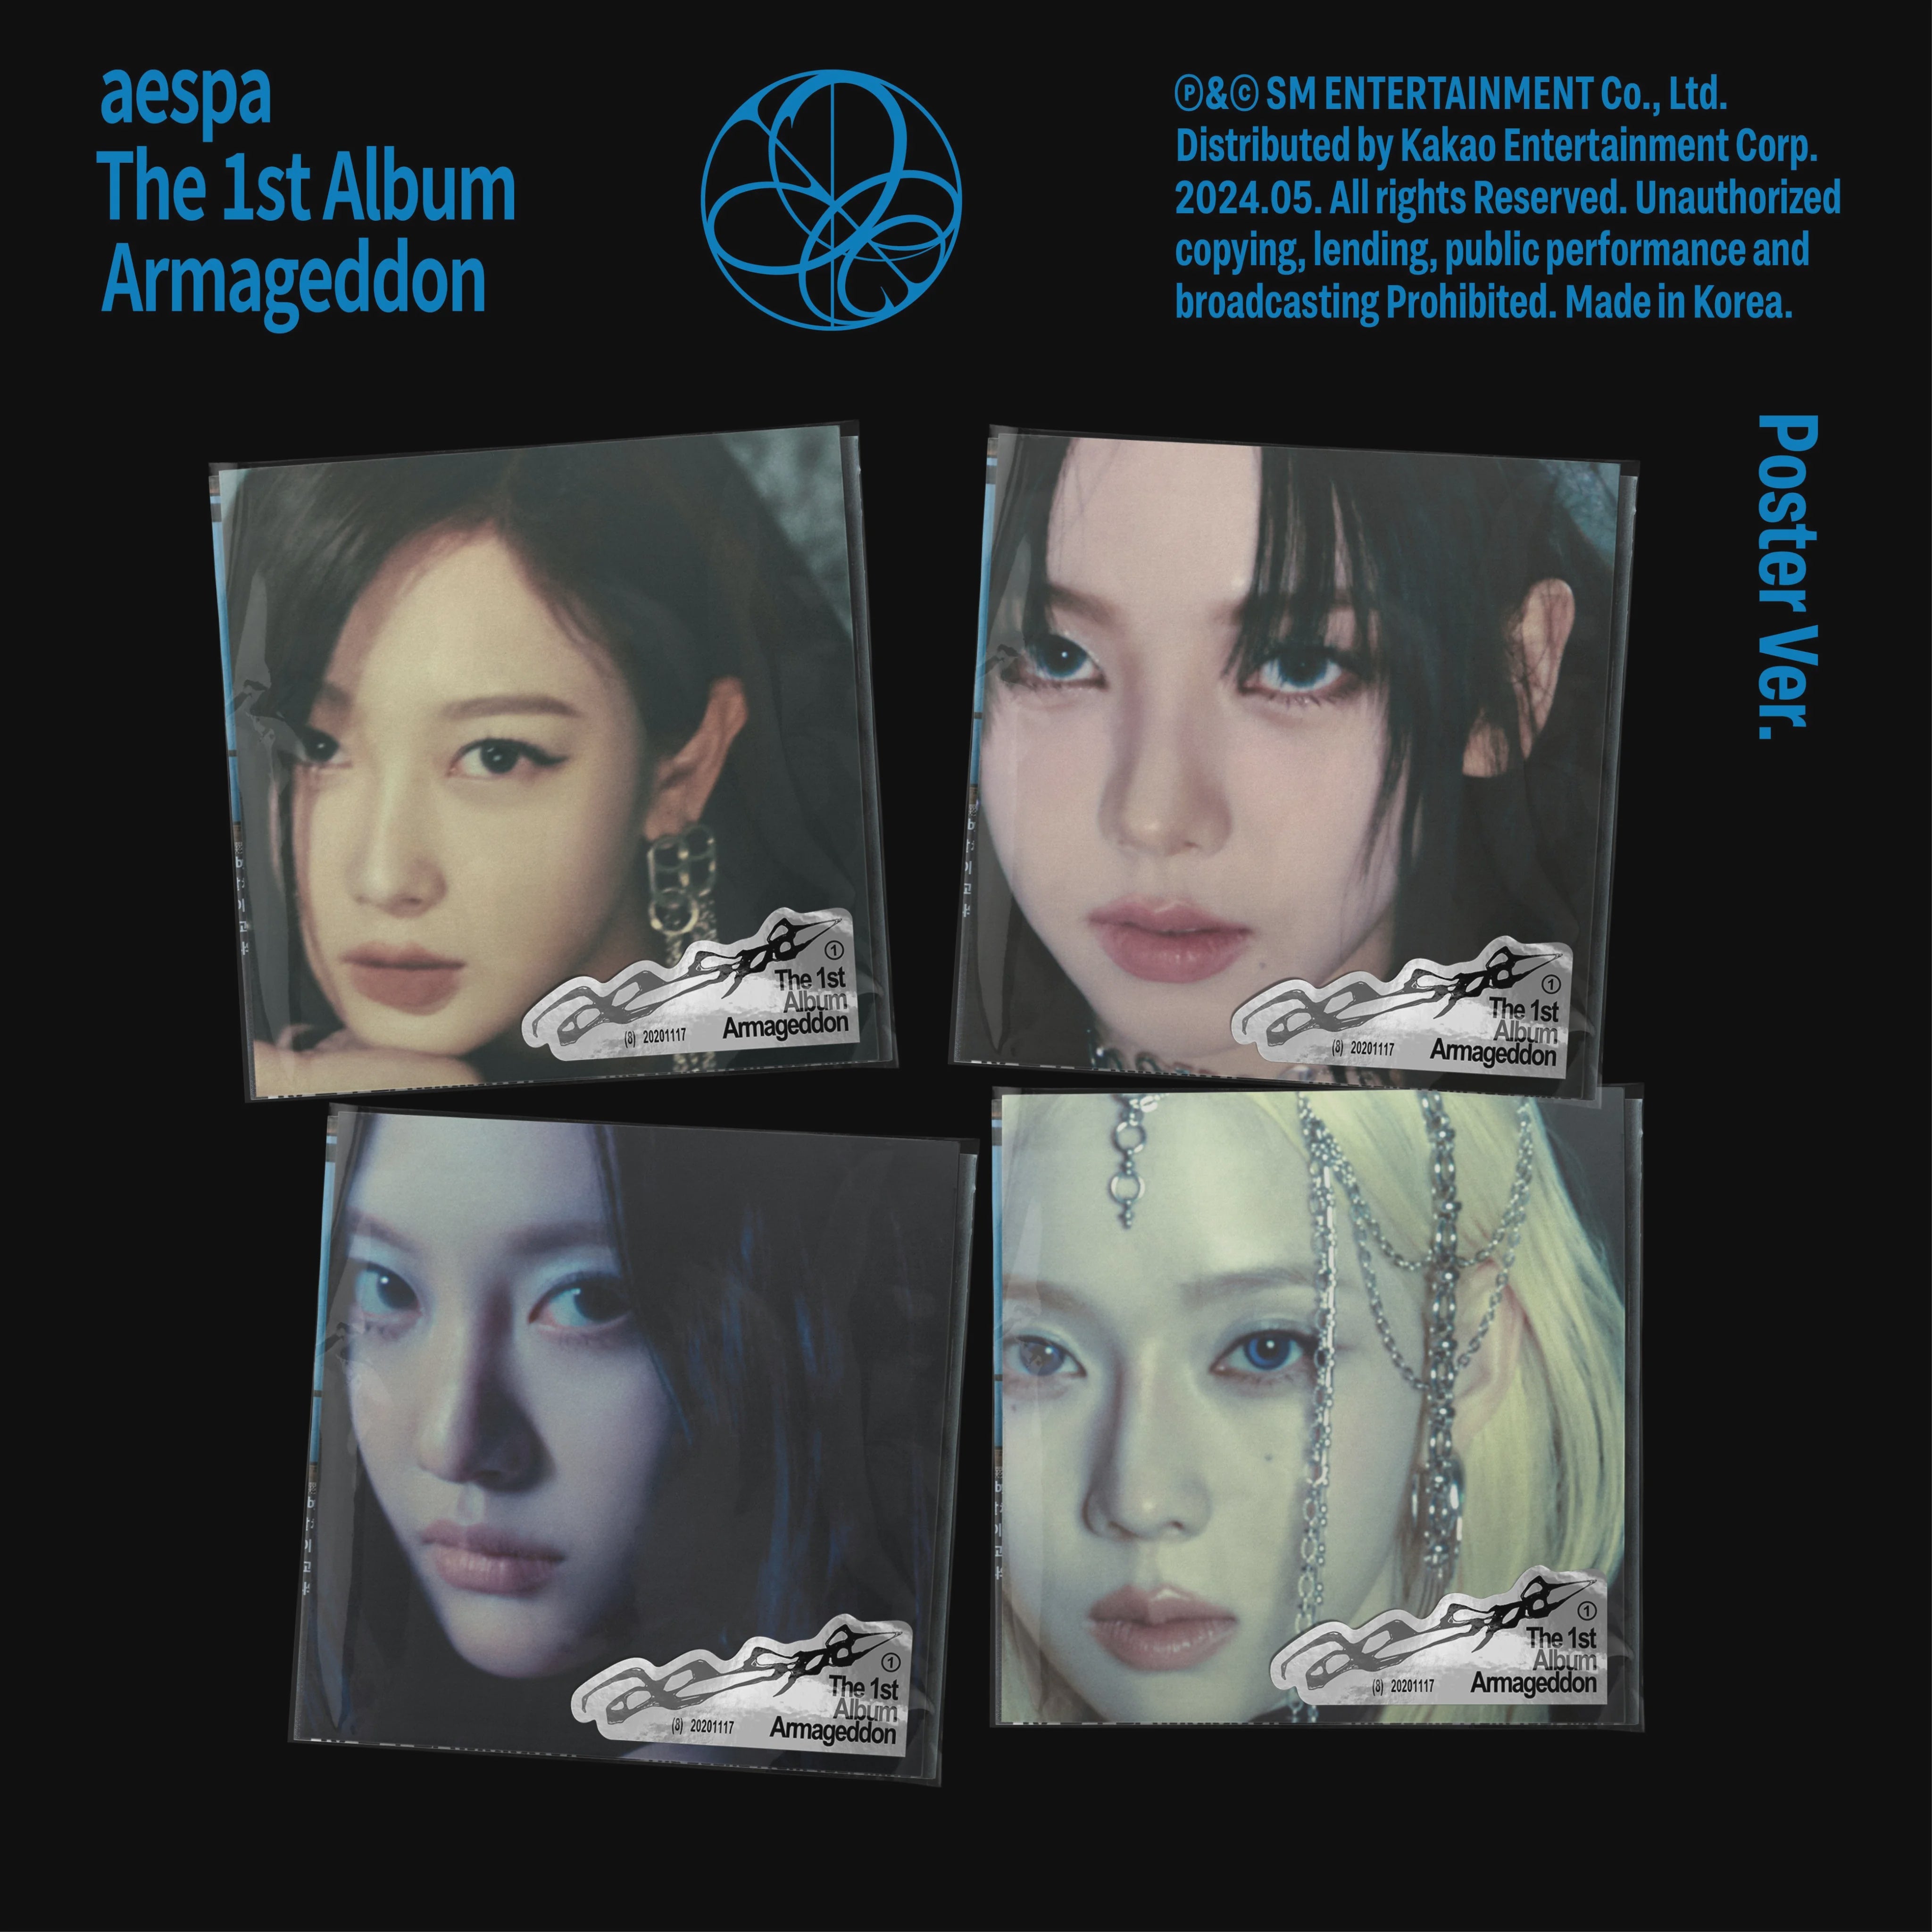 240523-aespa-the-1st-album-armageddon-authentic-my-power-v0-t3gearbdd62d1.jpg